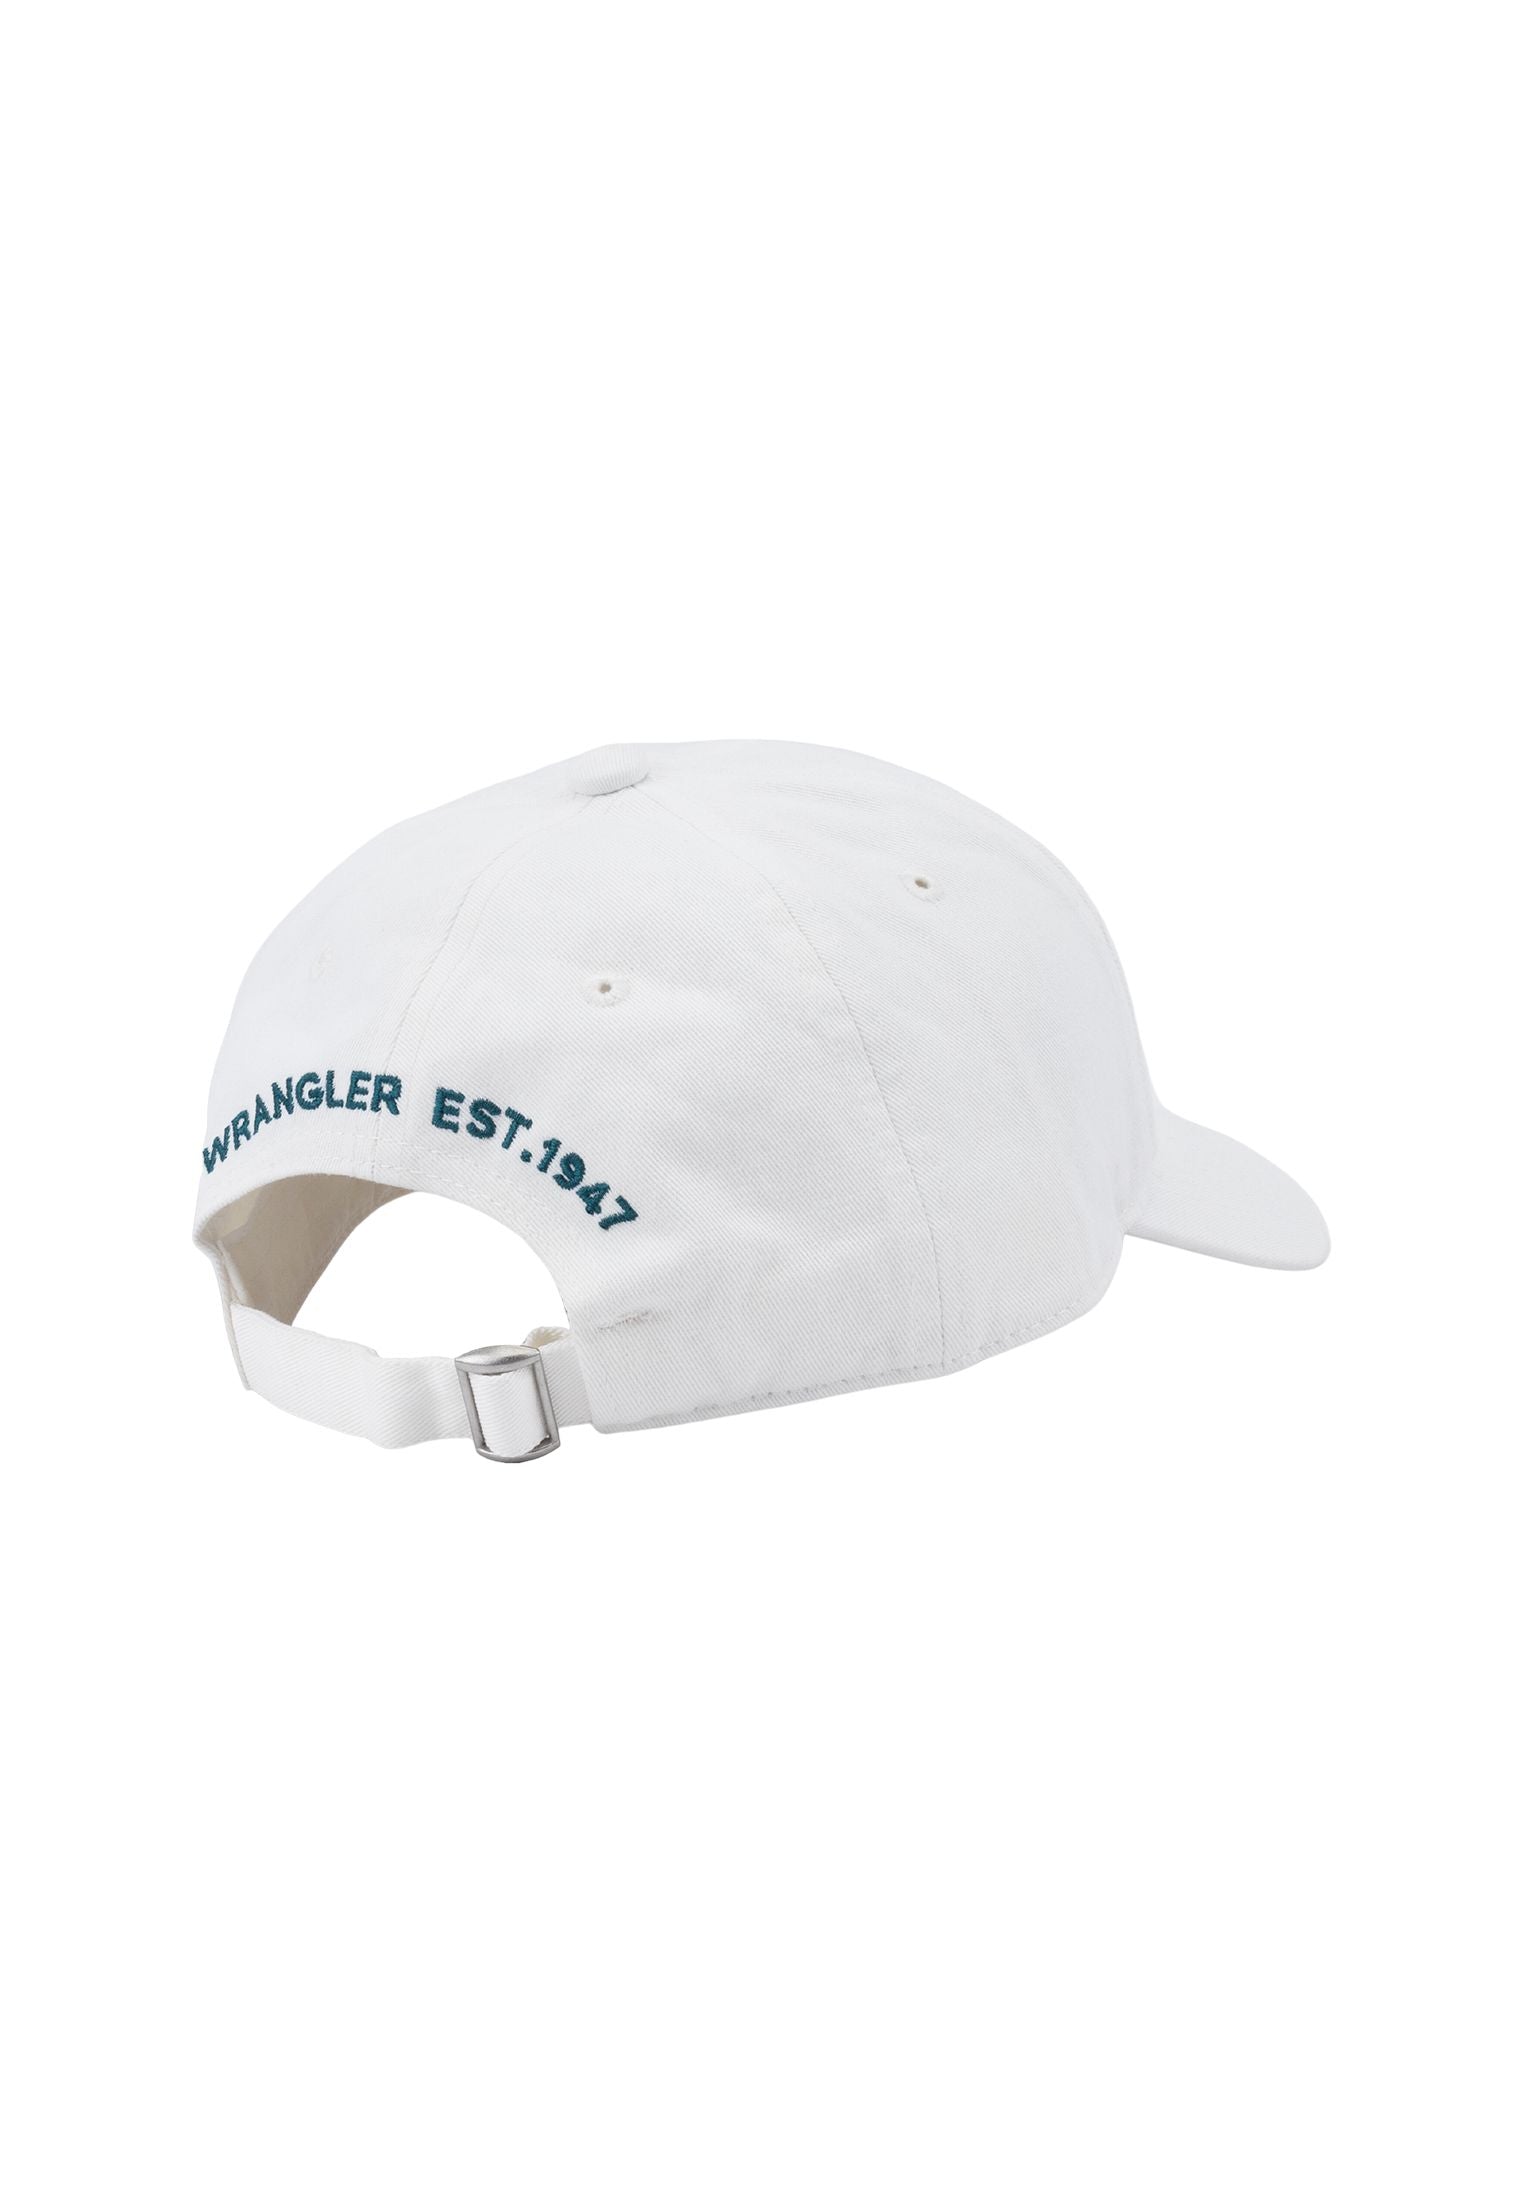 Washed Logo Cap in White Caps Wrangler   